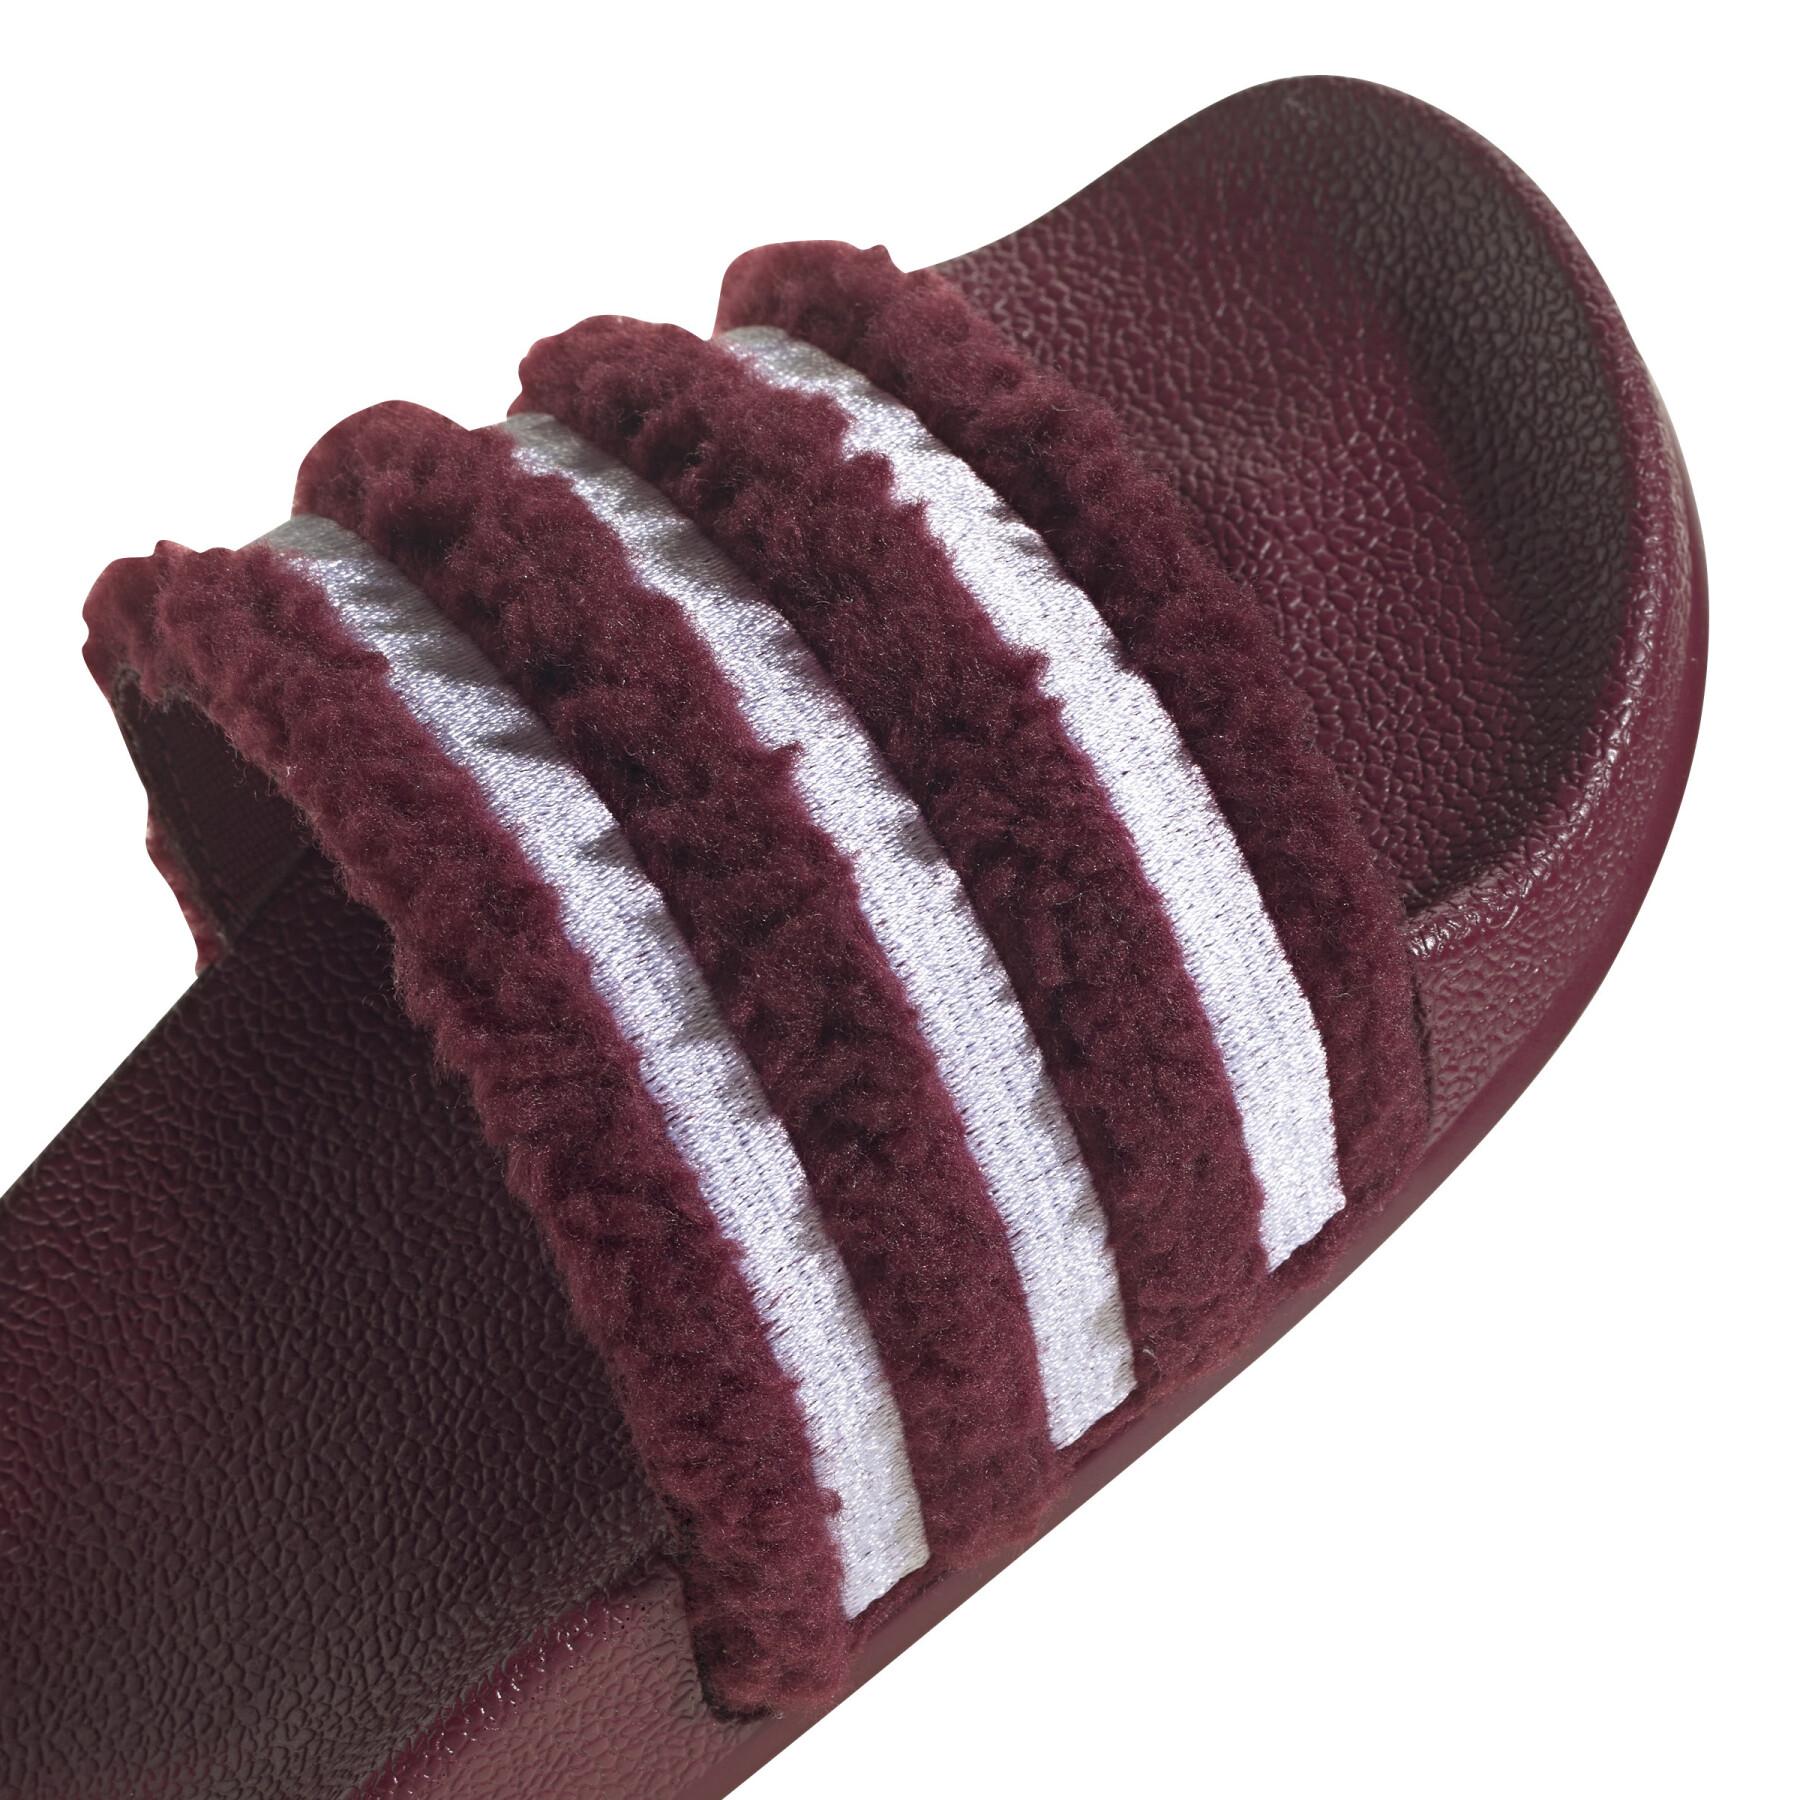 Dames slippers adidas Originals Adilette Slides